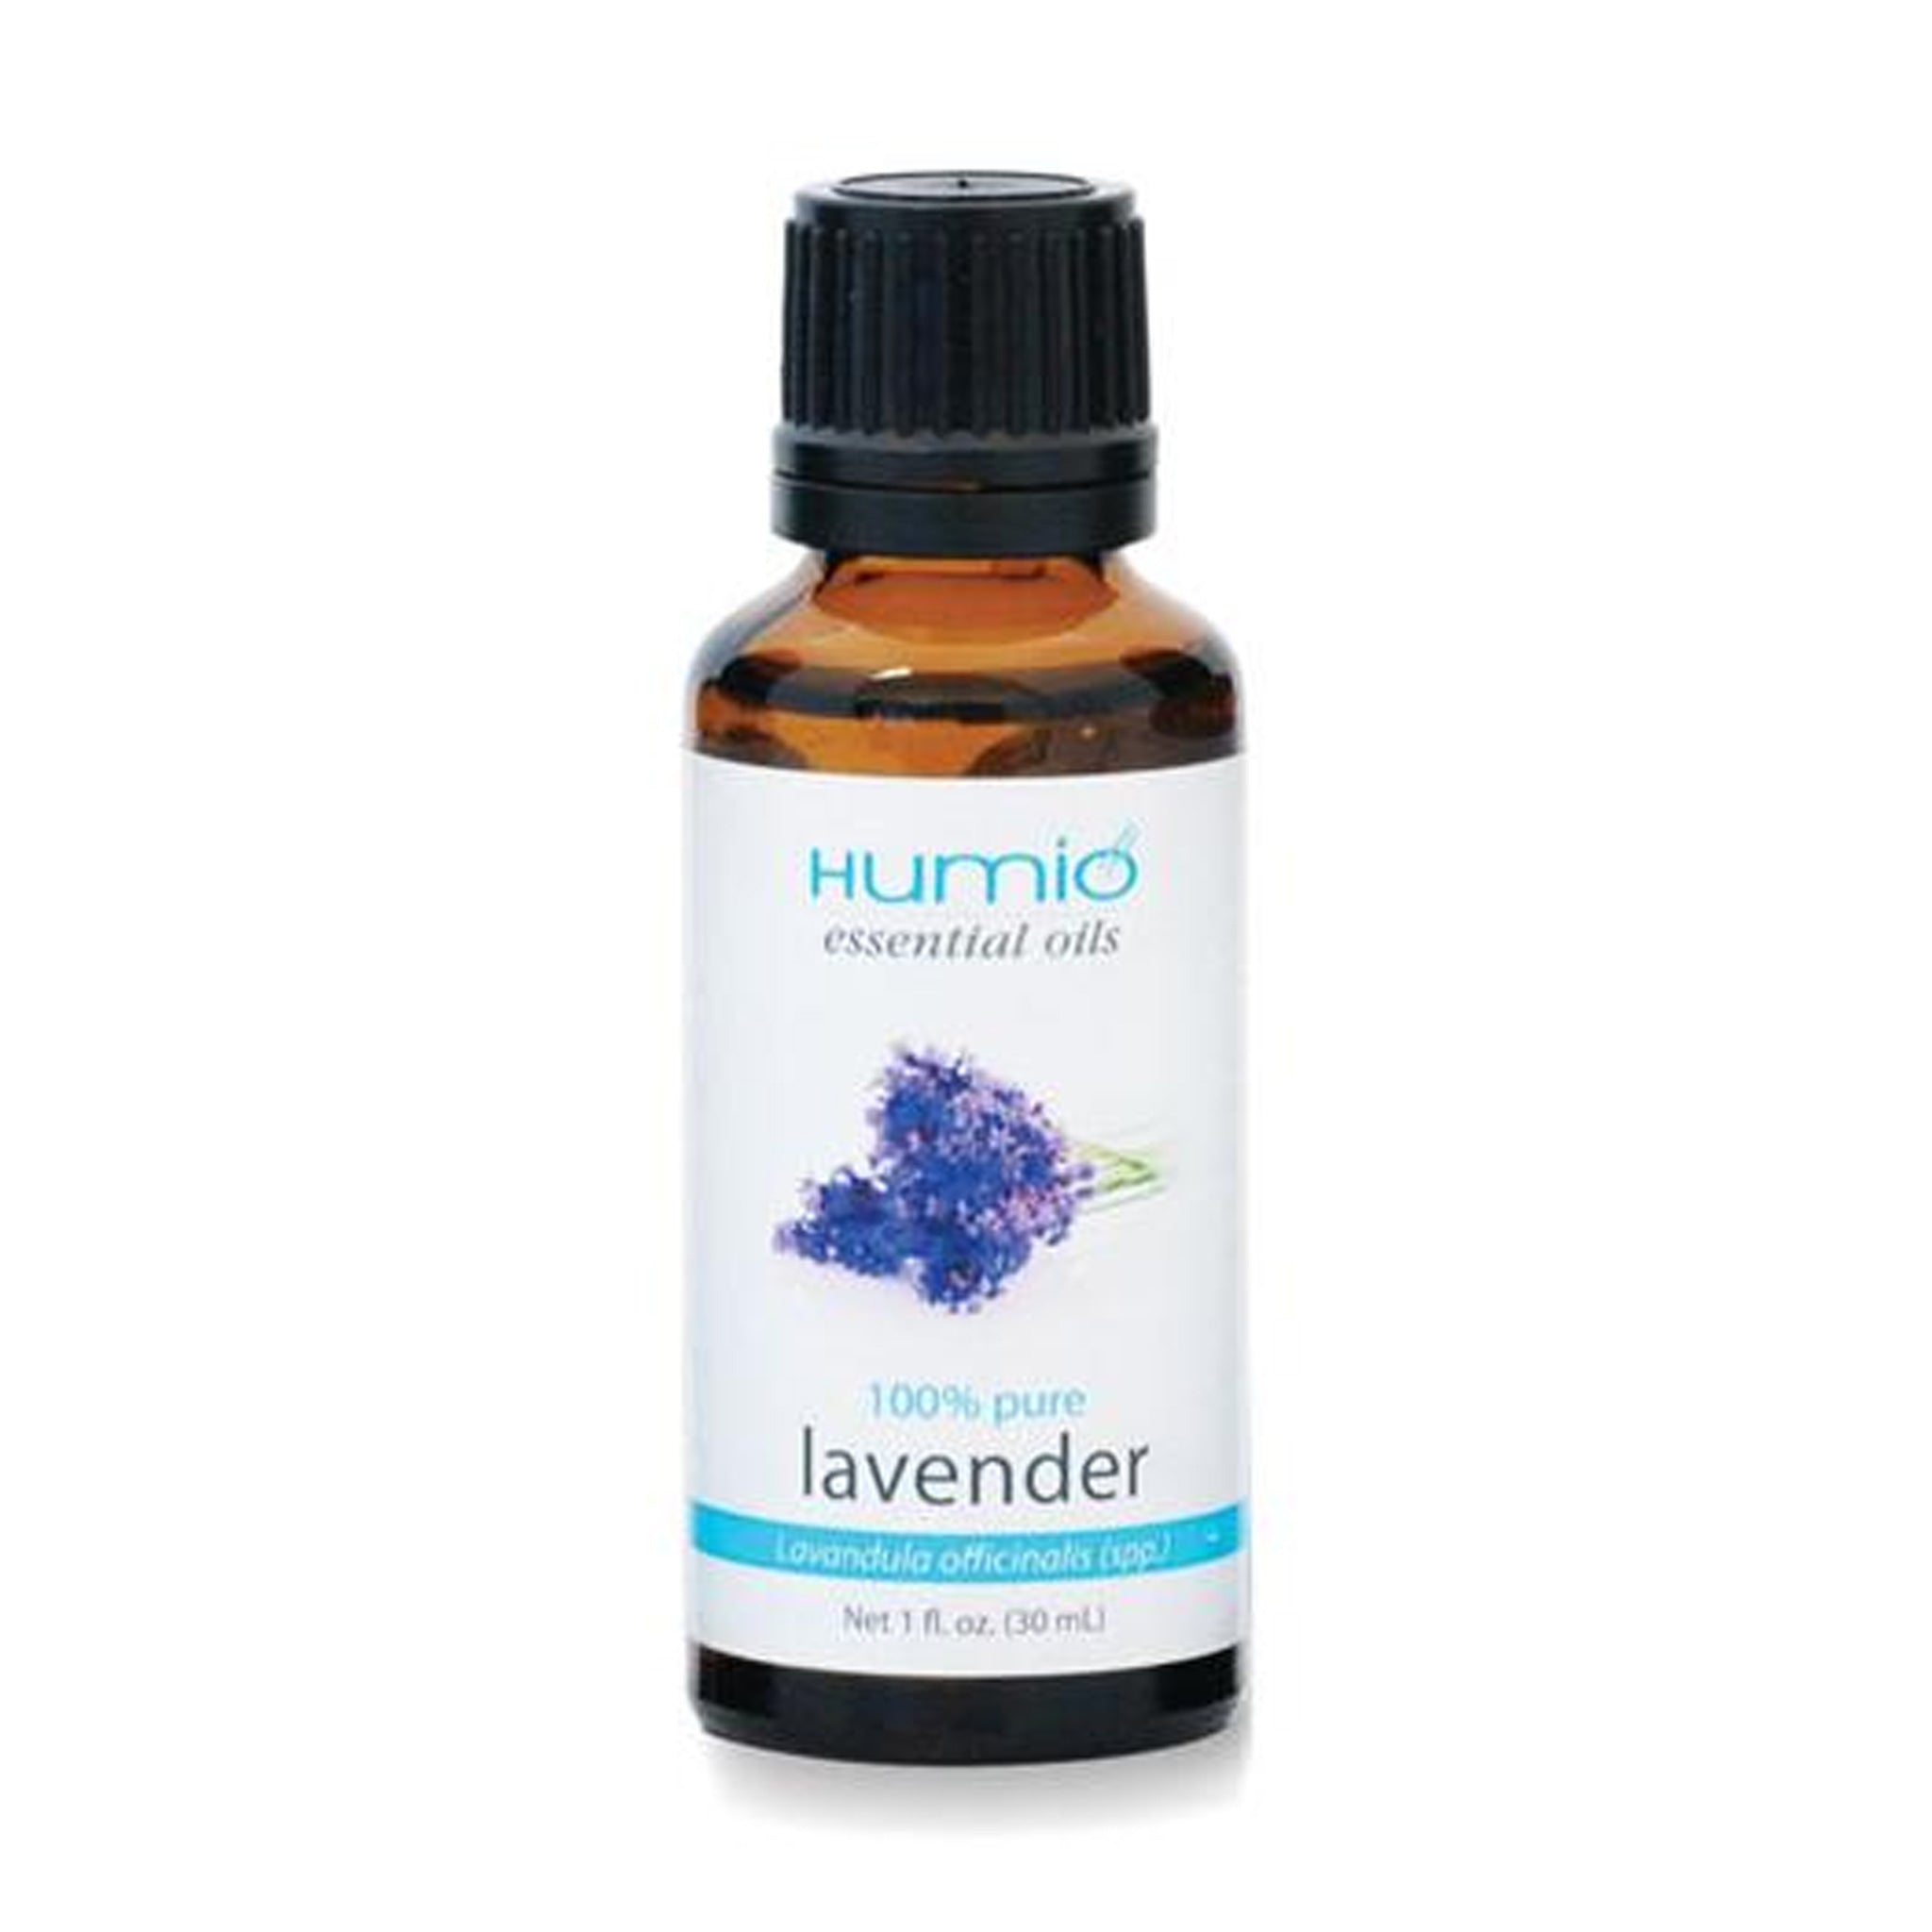 Humio Lavender Essential Oil (1 oz / 30mL) HU-35LA - Tribest